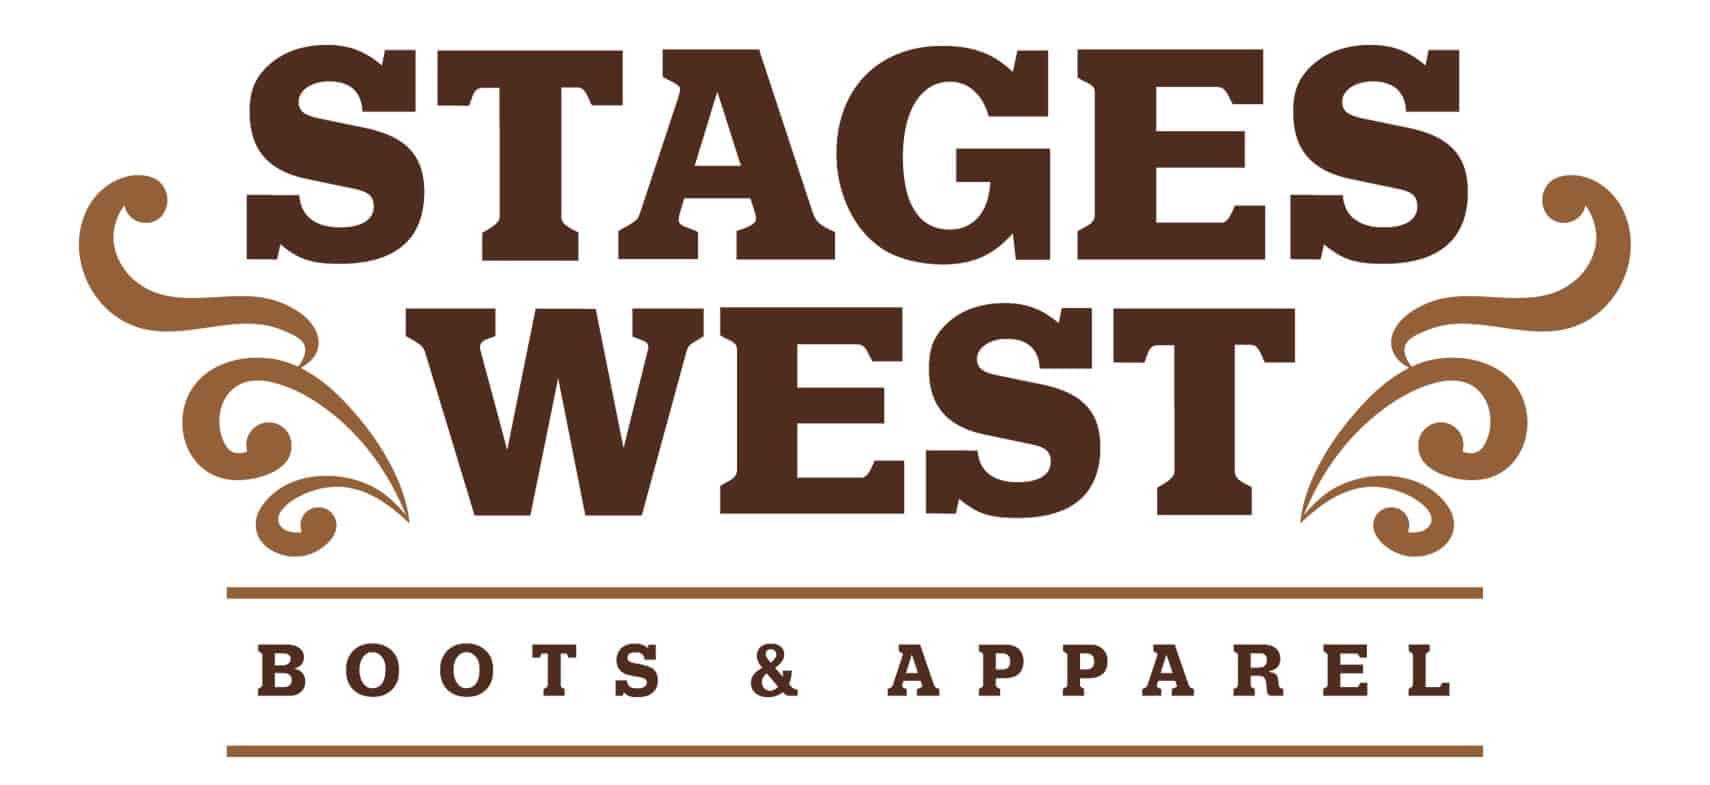 Image result for stages west apparel logo